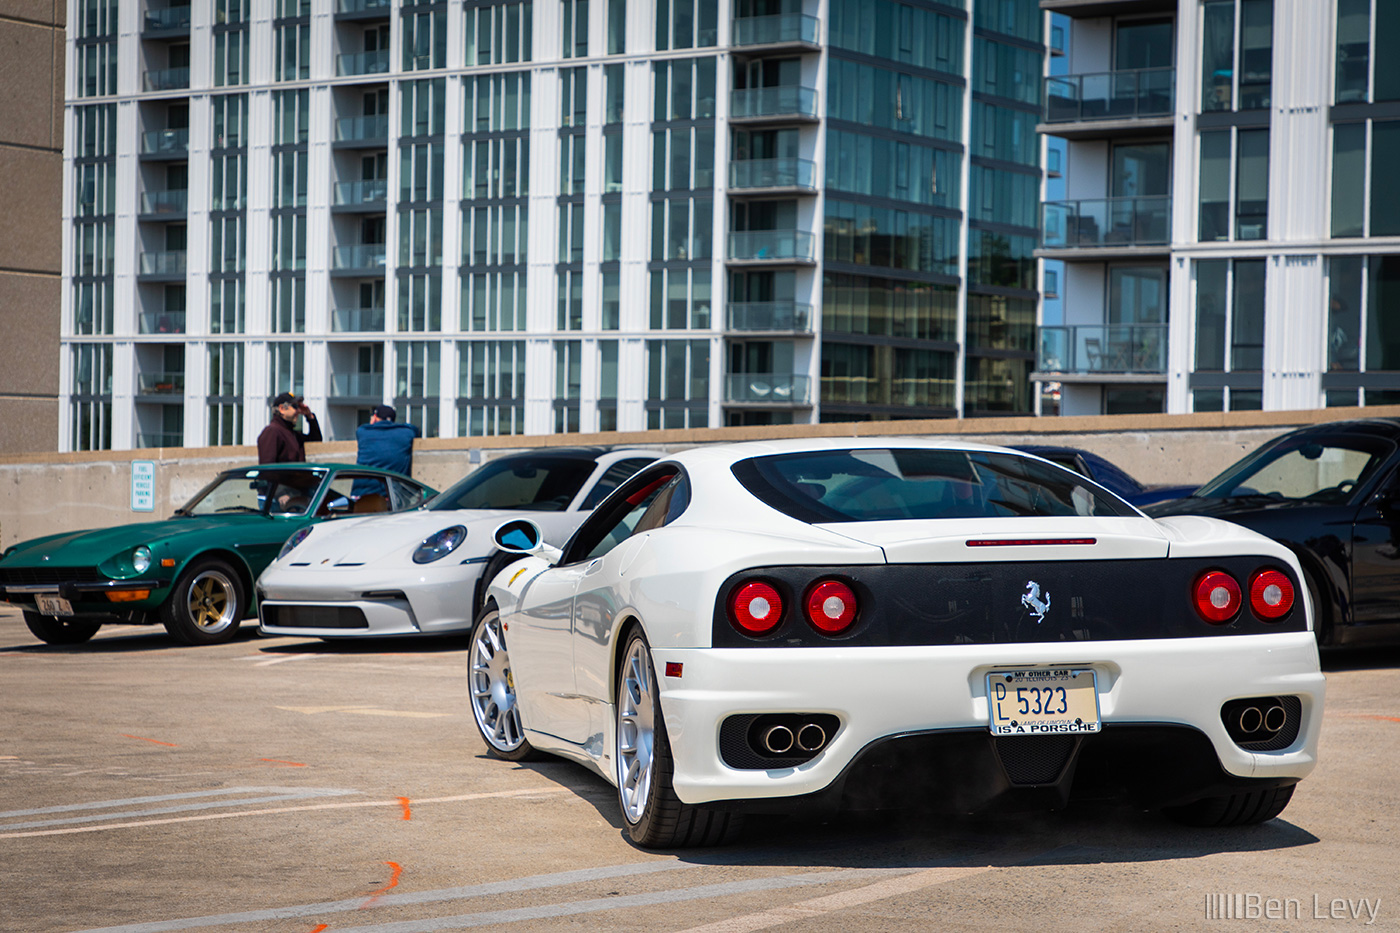 White Ferrari 360 Modena Leaving Car Meet in Chicago